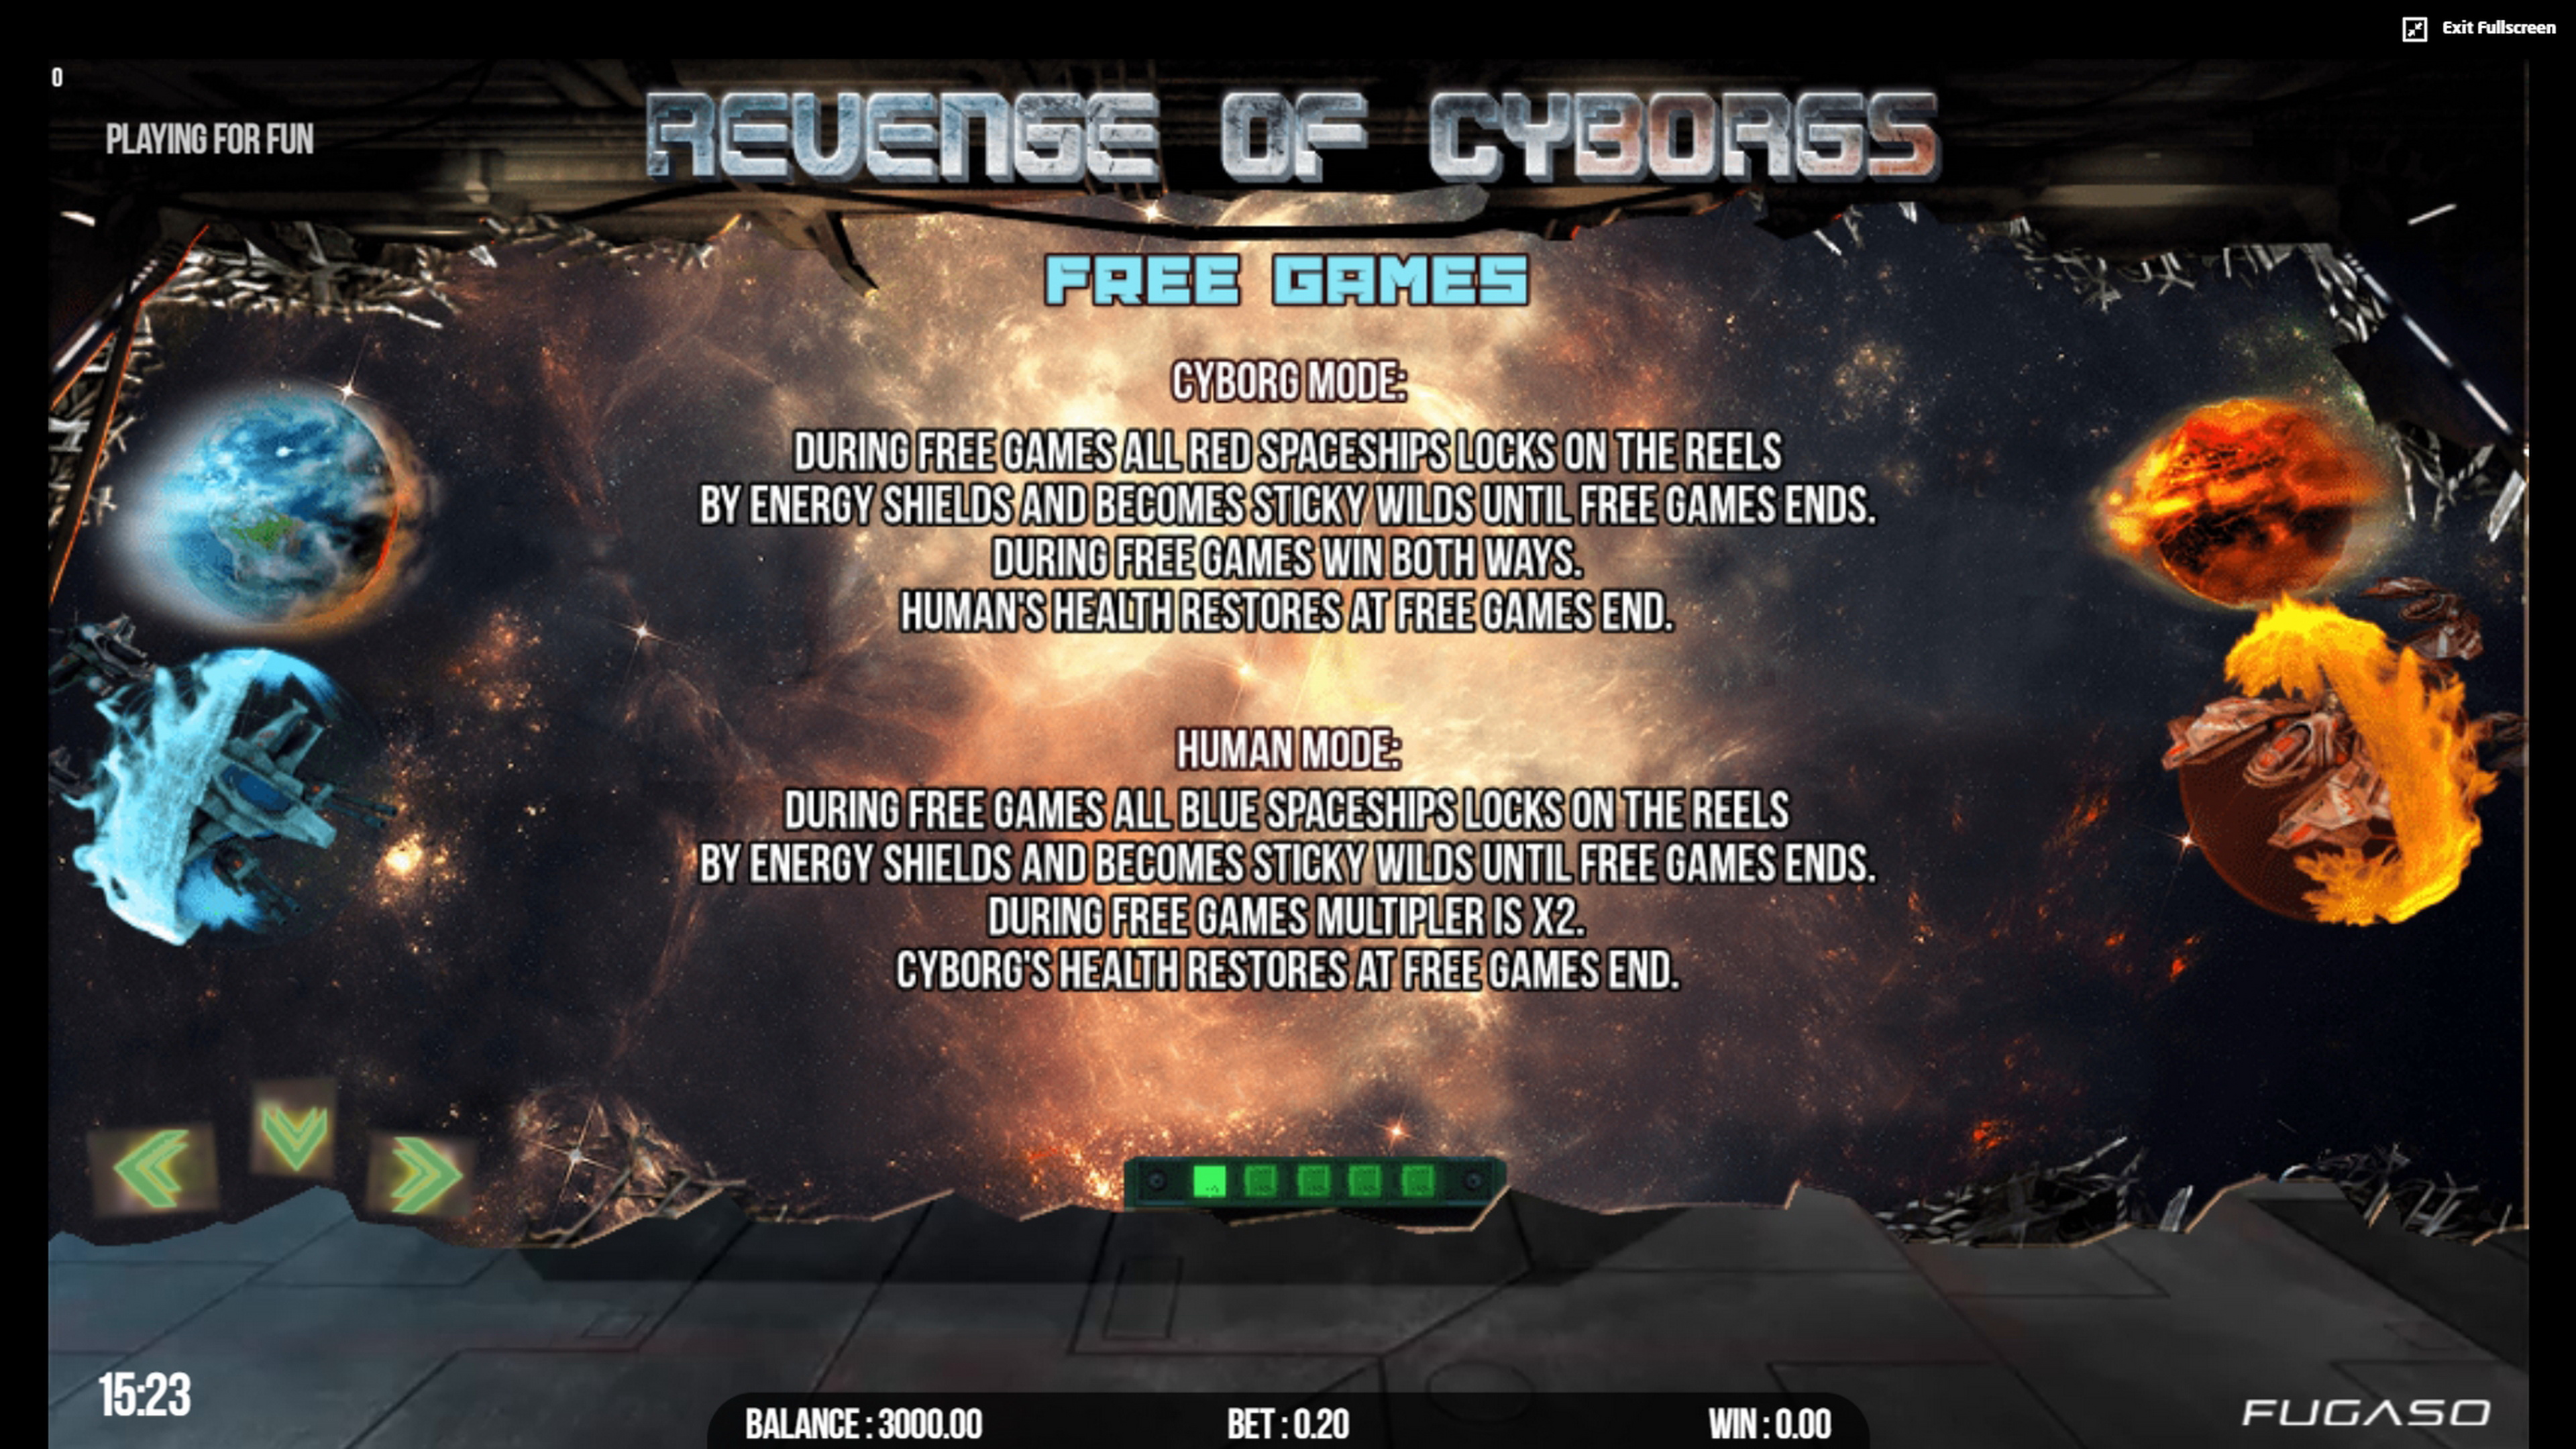 Info of Revenge of Cyborgs Slot Game by Fugaso